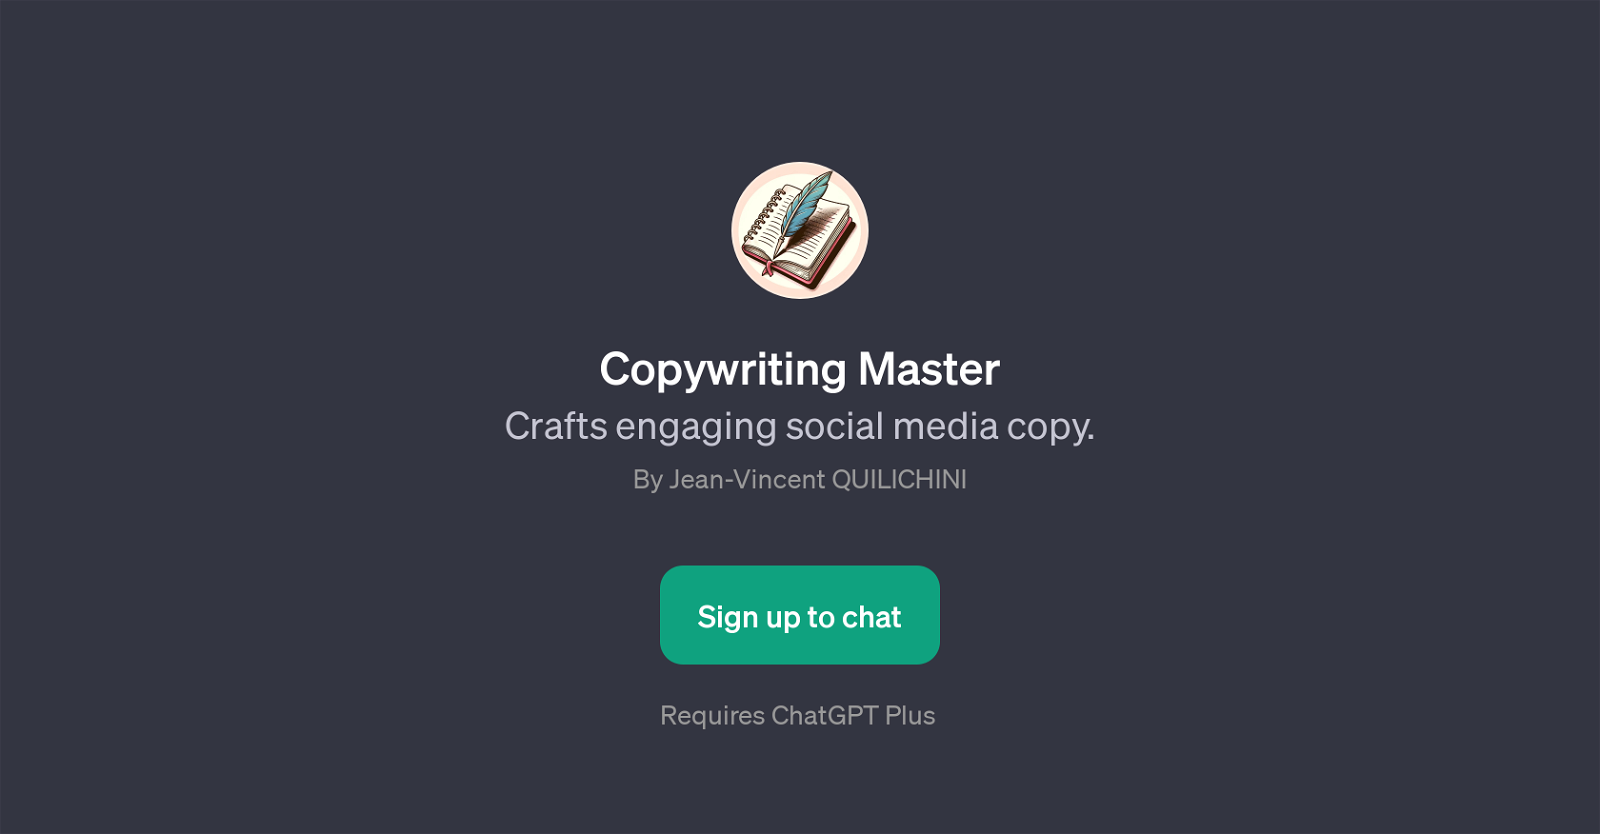 Copywriting Master website